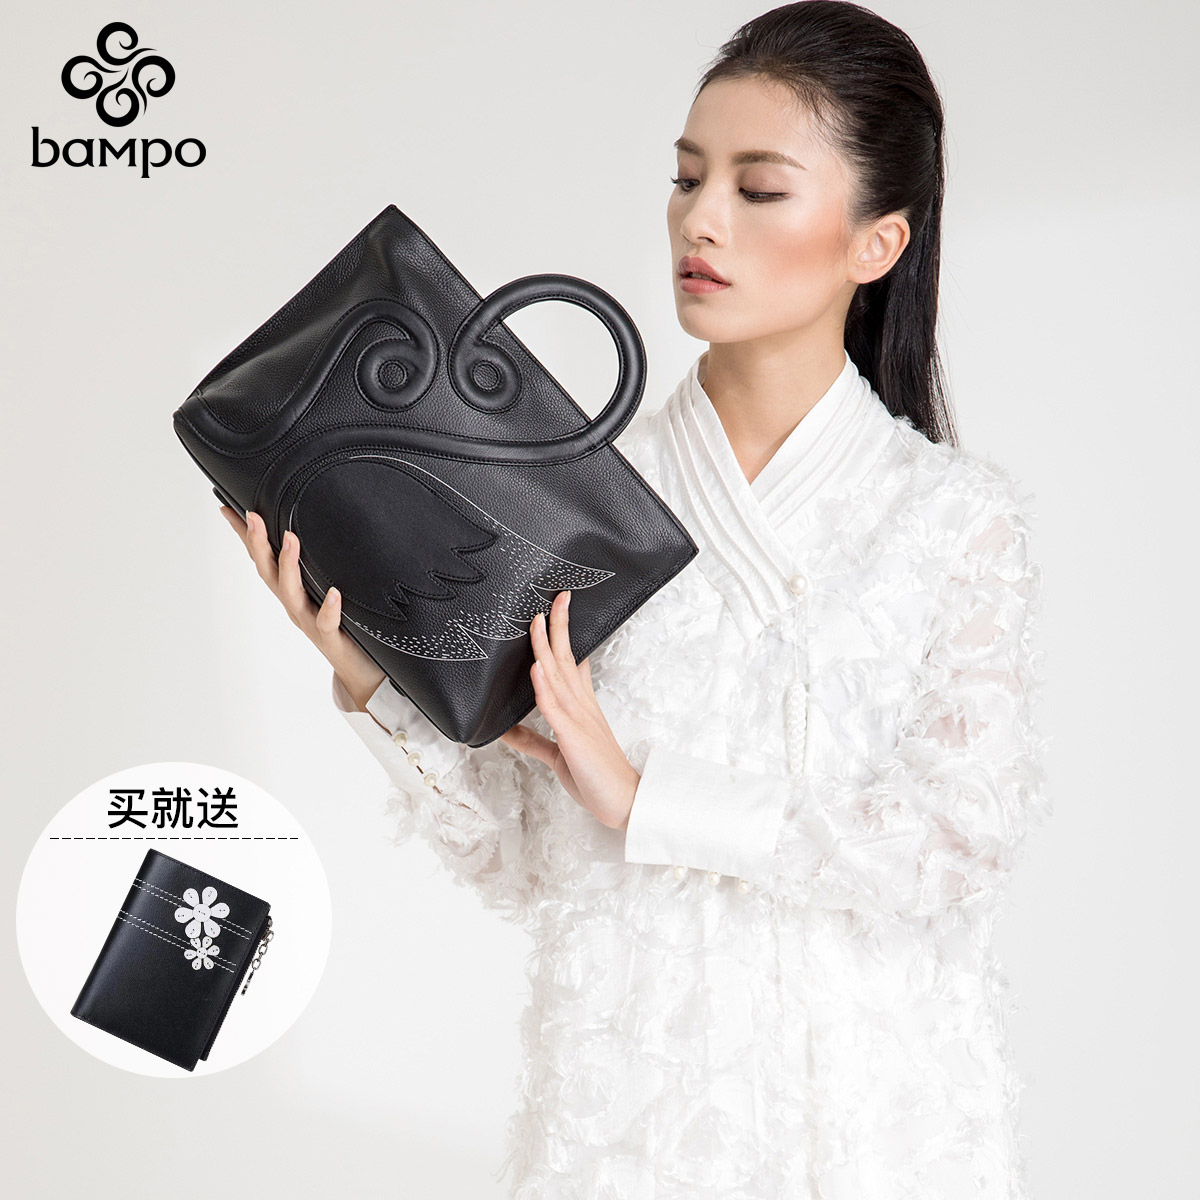 Banpo Xiaozhong Lightweight and Luxury Designer Brand Female Bag Genuine Leather Swan Bag Black Soft Slant Handbag Single Shoulder Bag